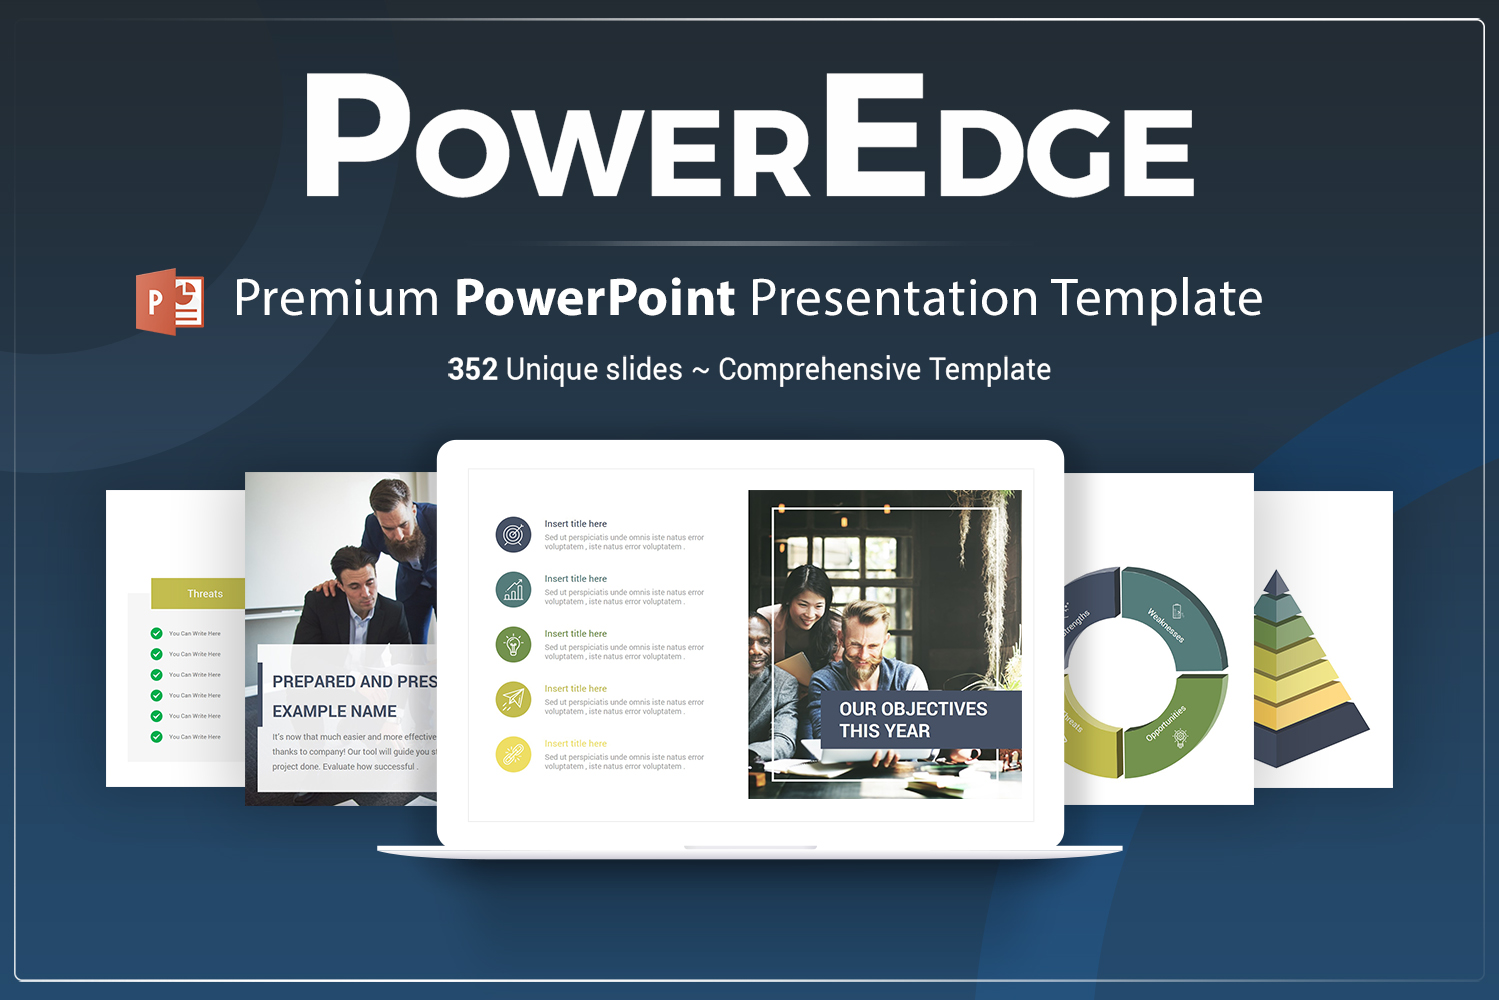 Power Edge PowerPoint Presentation Template